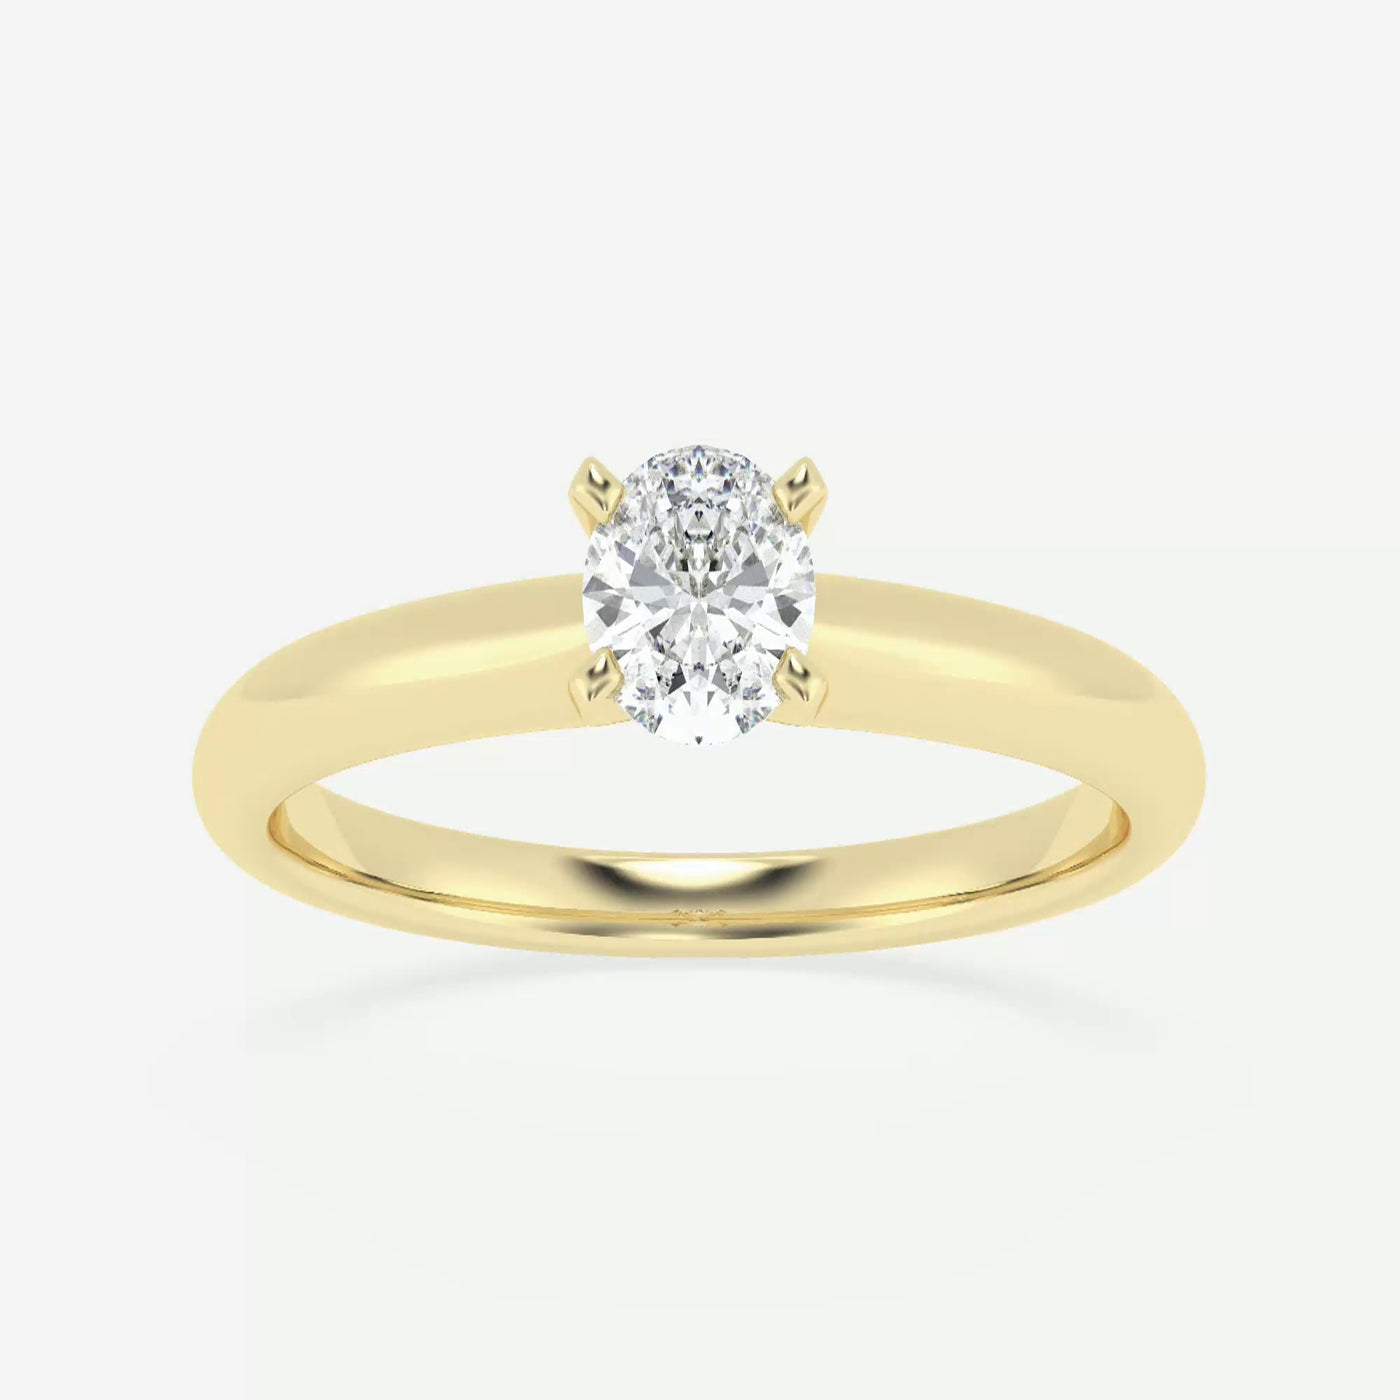 _main_image@SKU:LGD-XR3535FE3-GY3~#carat_0.50#diamond-quality_def,-vs1+#metal_18k-yellow-gold